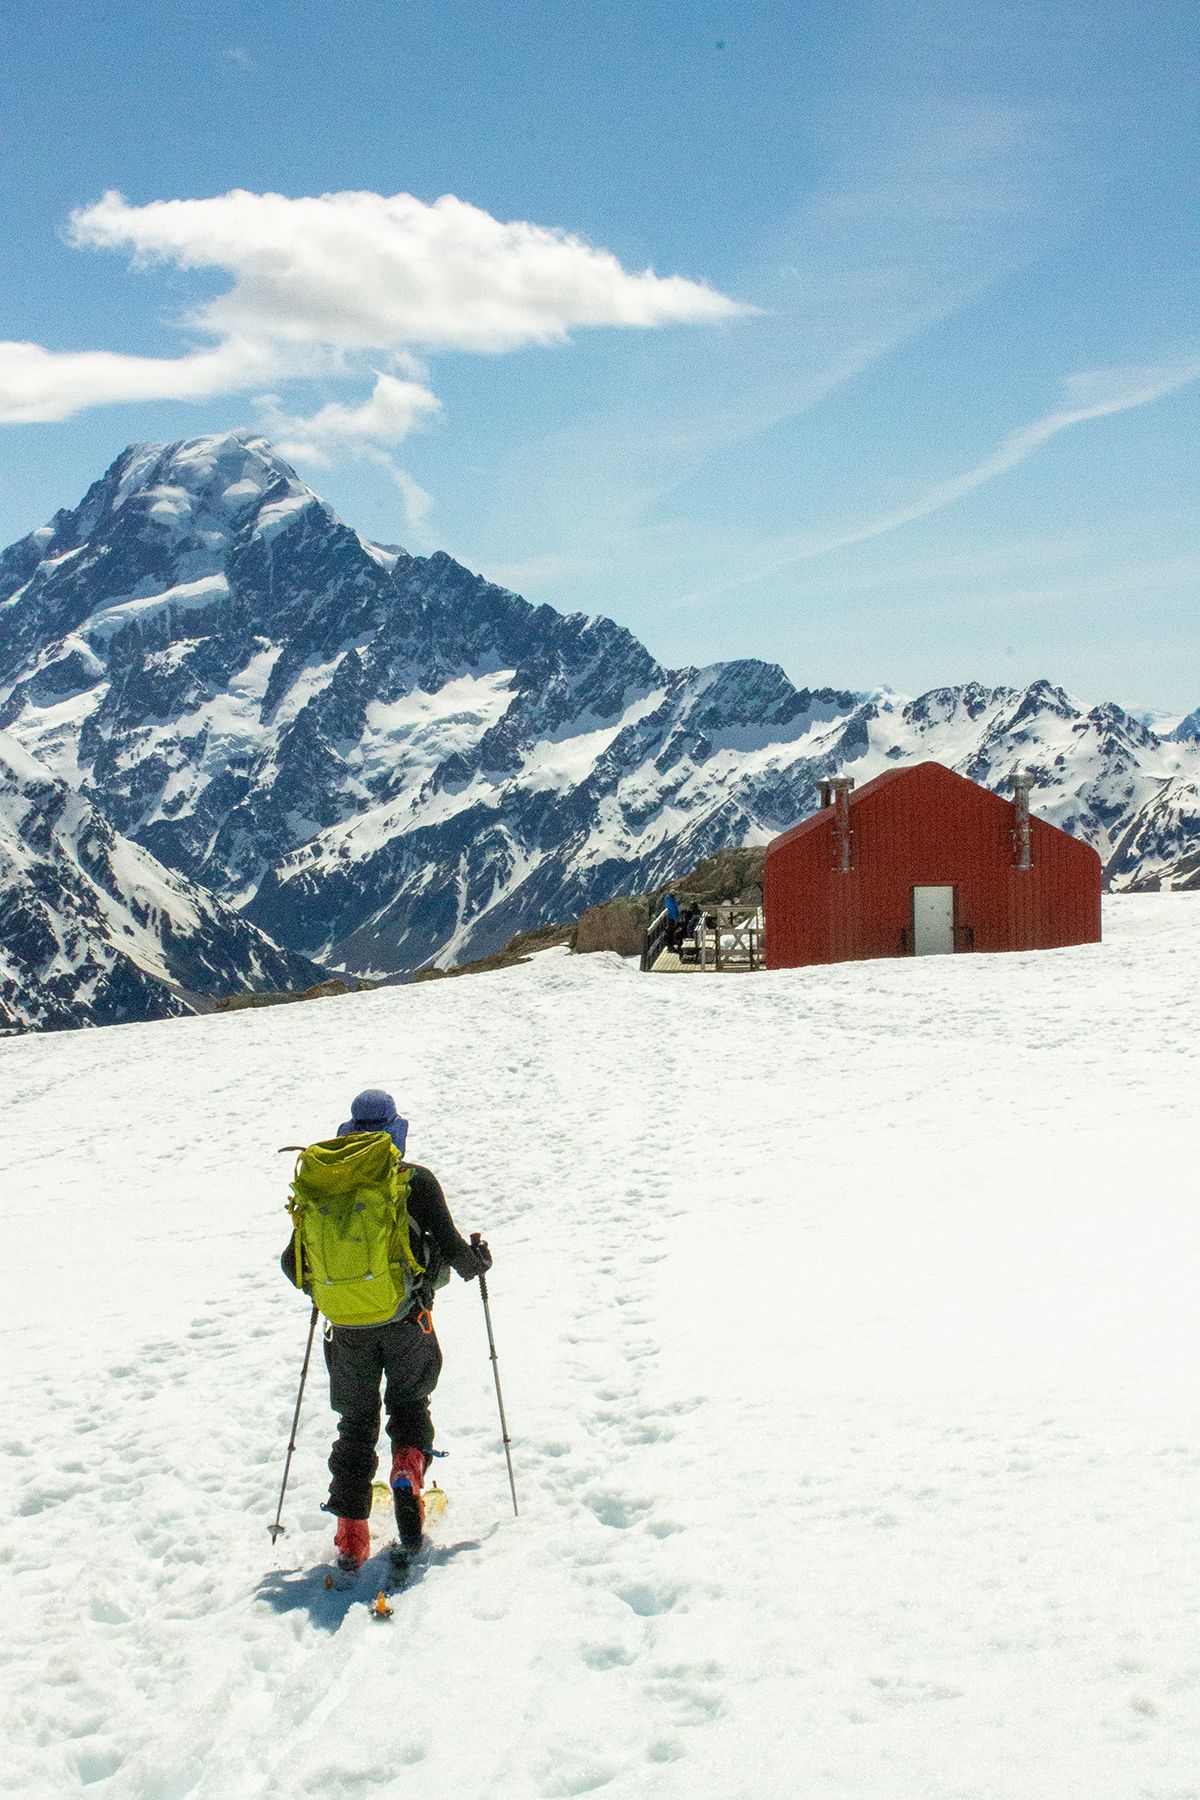 Skier approaching hut while ski-touring, Aoraki in the background.